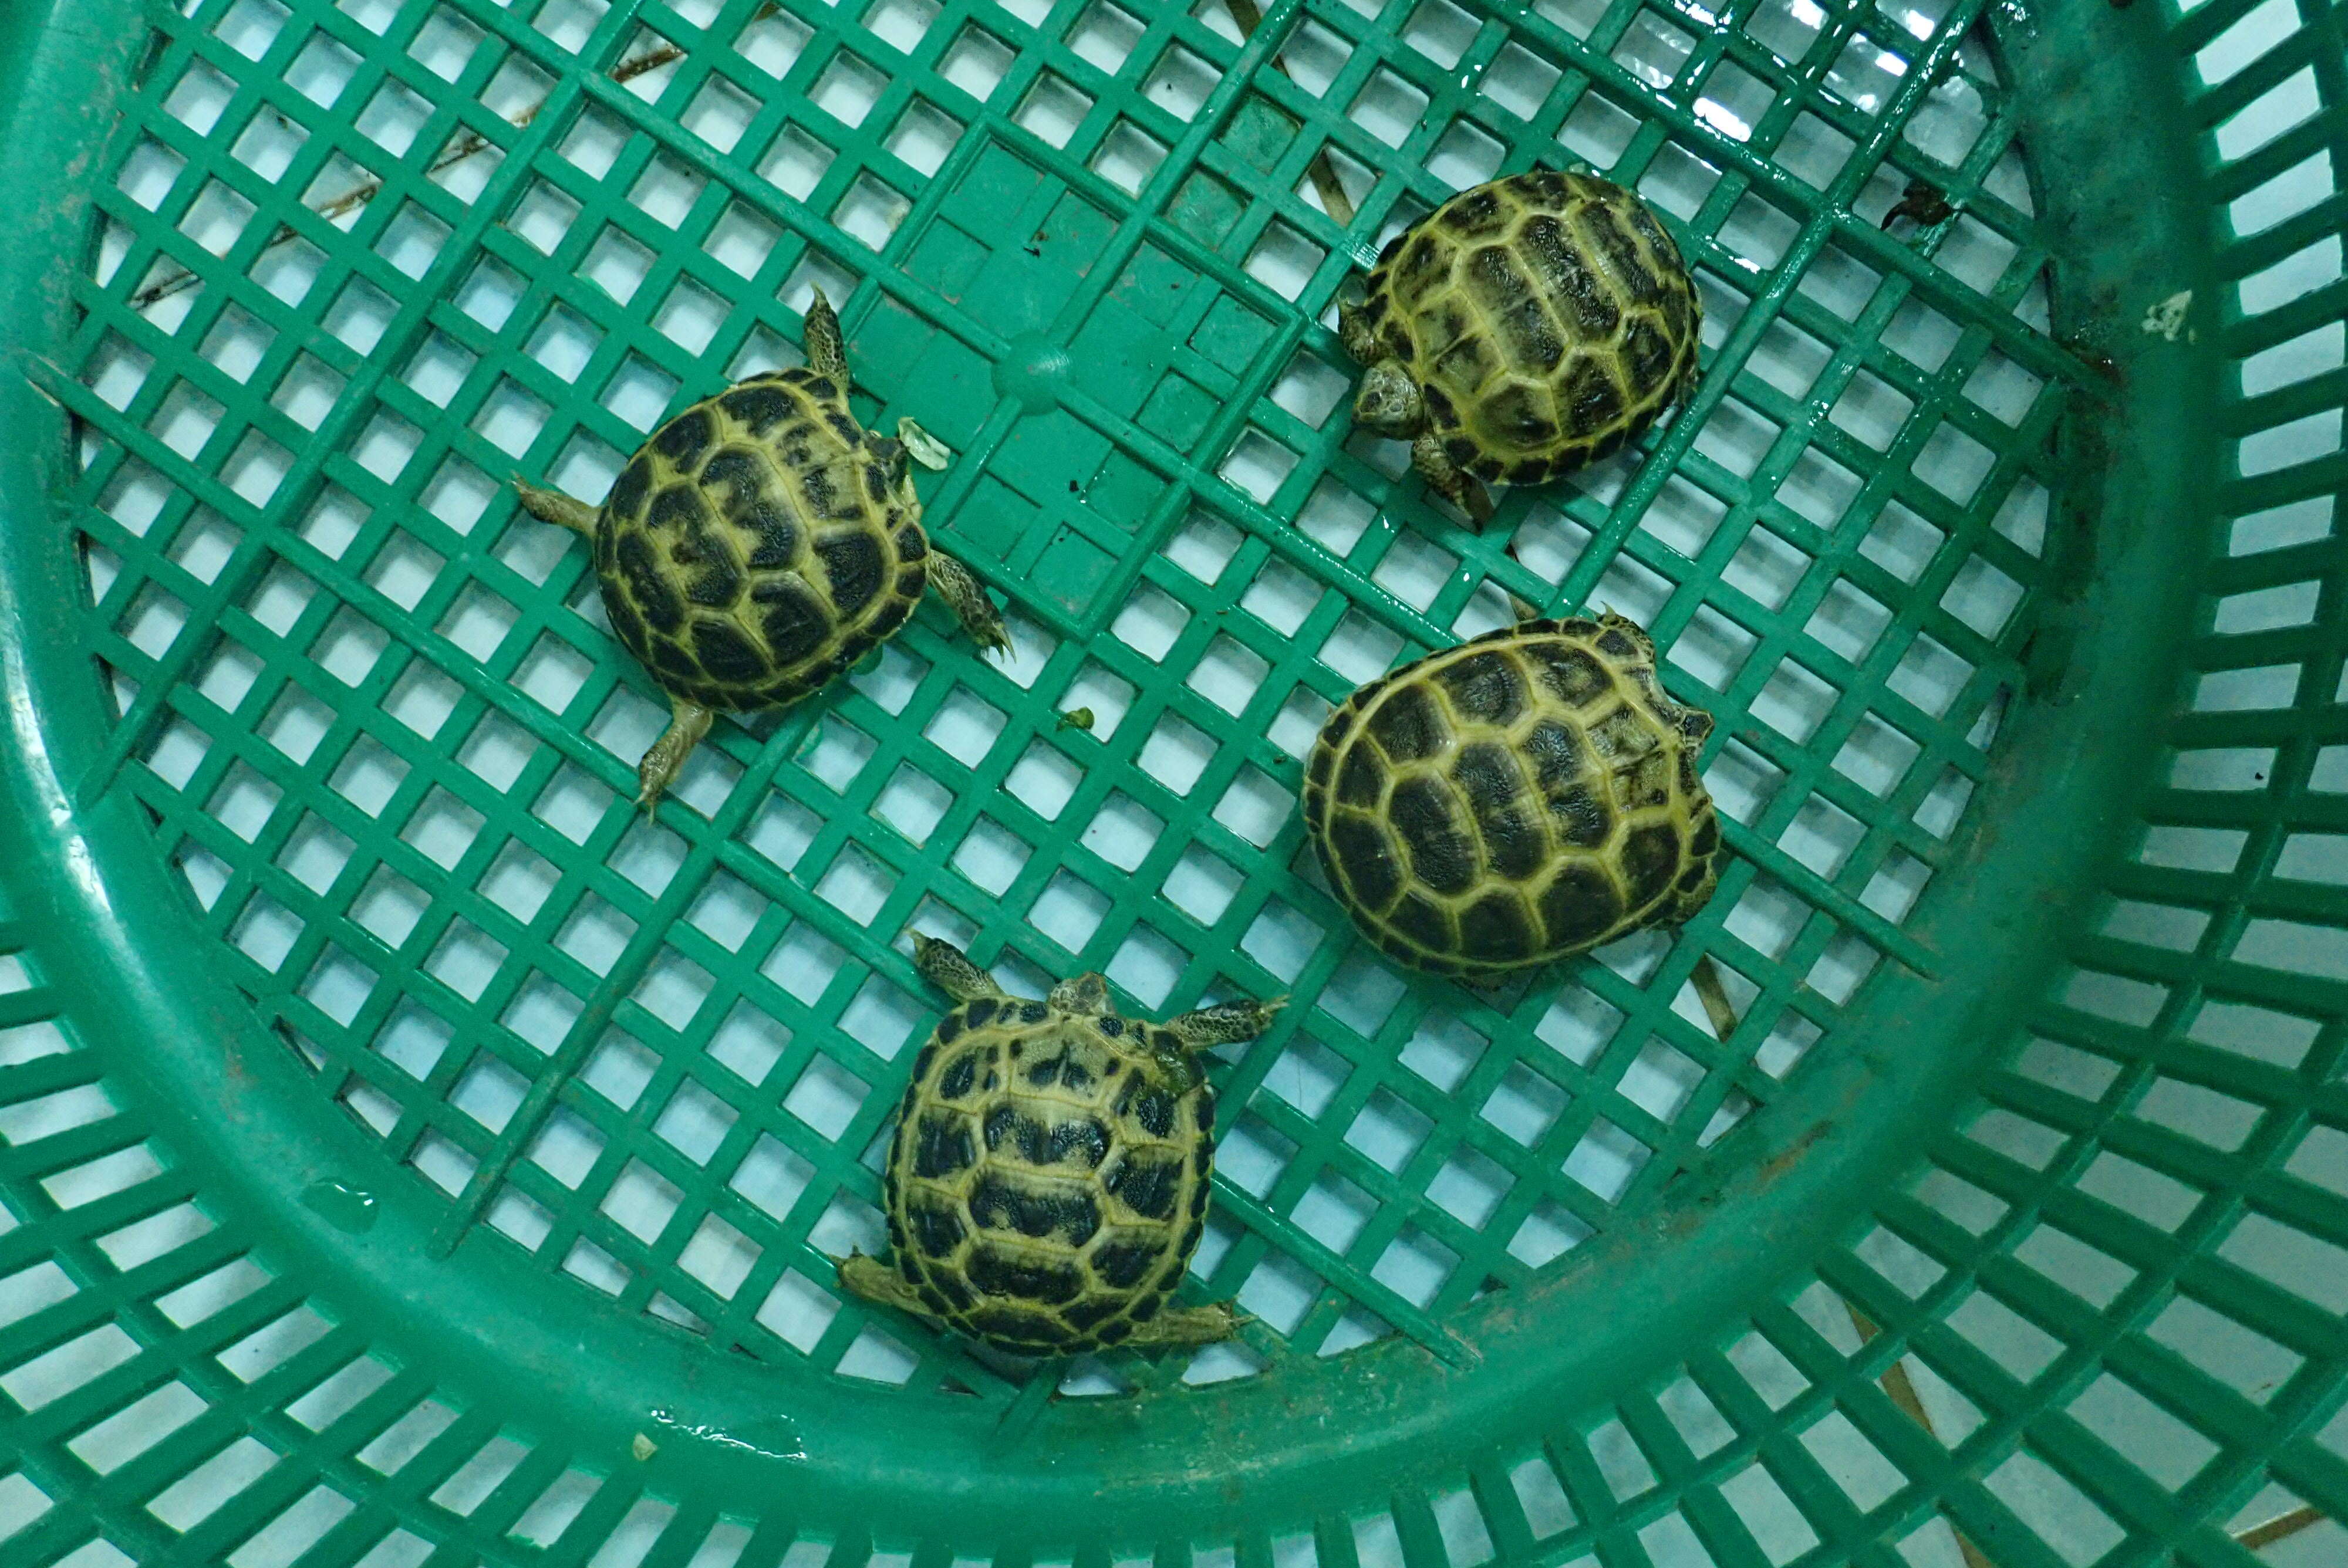 Rescued tortoises in crate